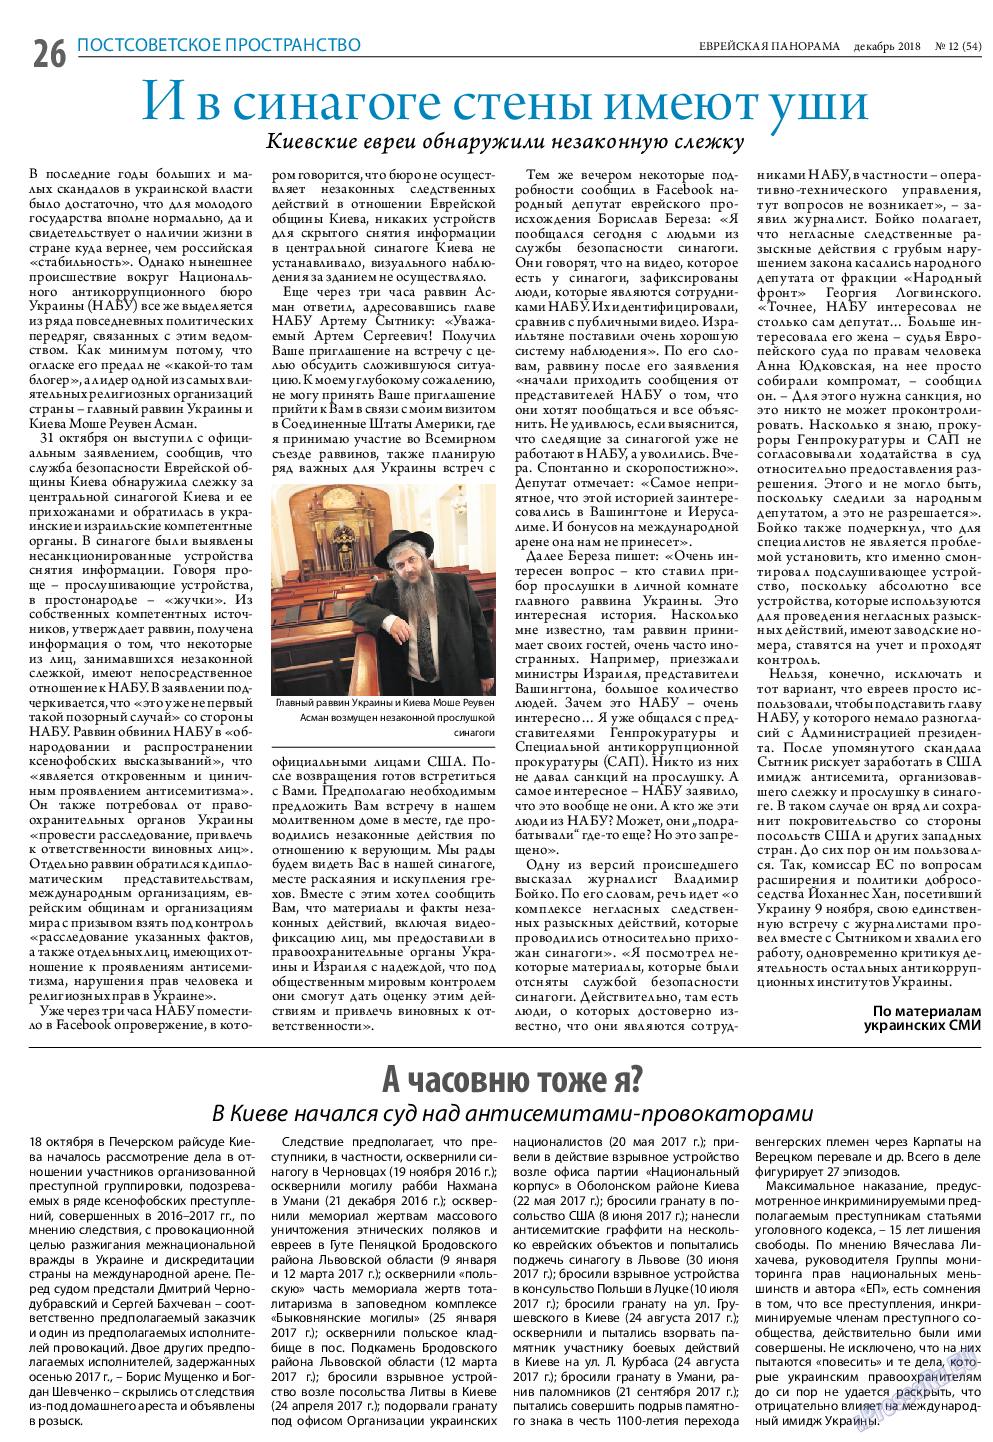 Еврейская панорама, газета. 2018 №12 стр.26